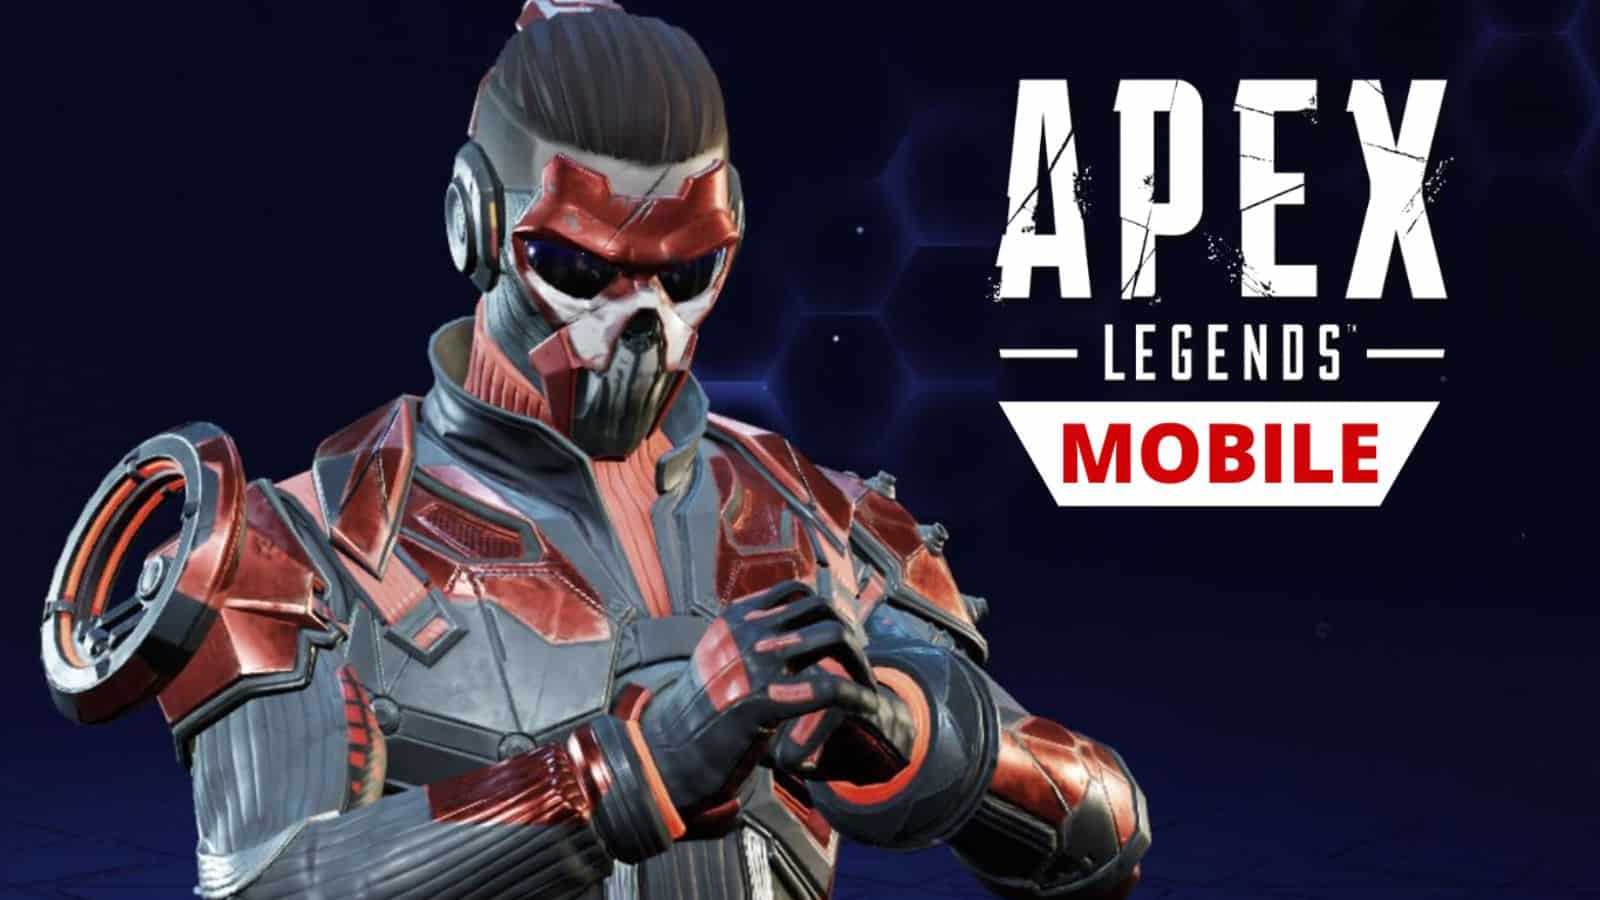 APEX Legends Mobile Leaks